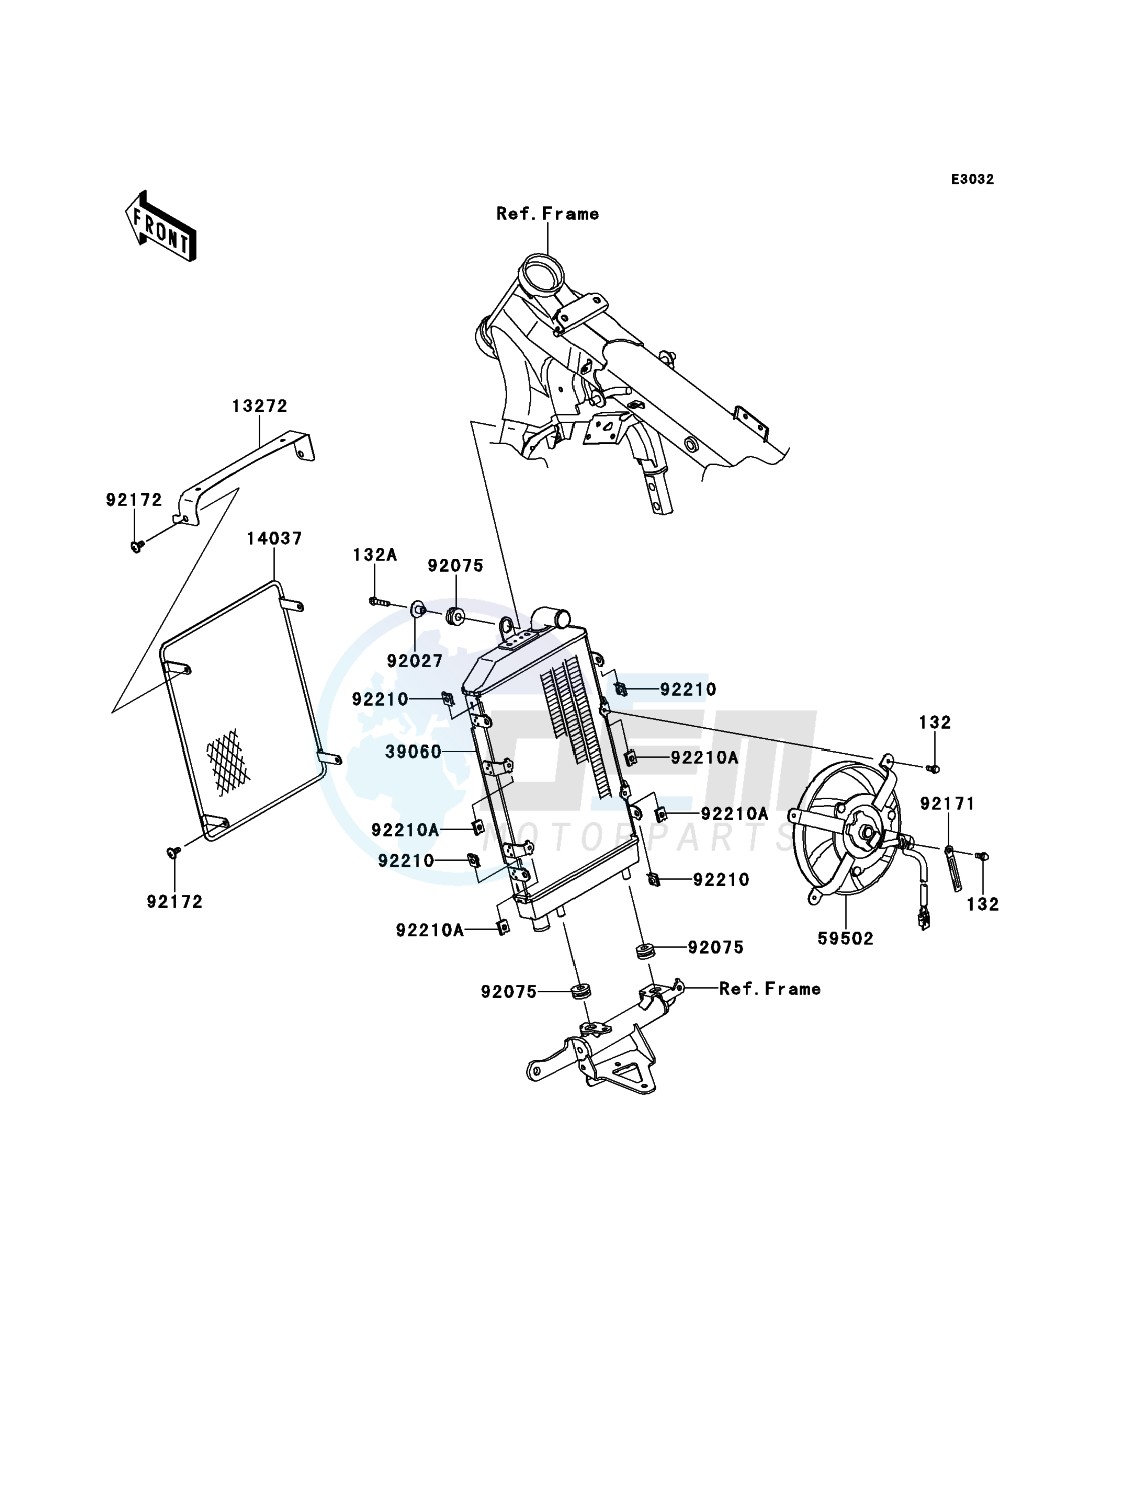 Radiator blueprint